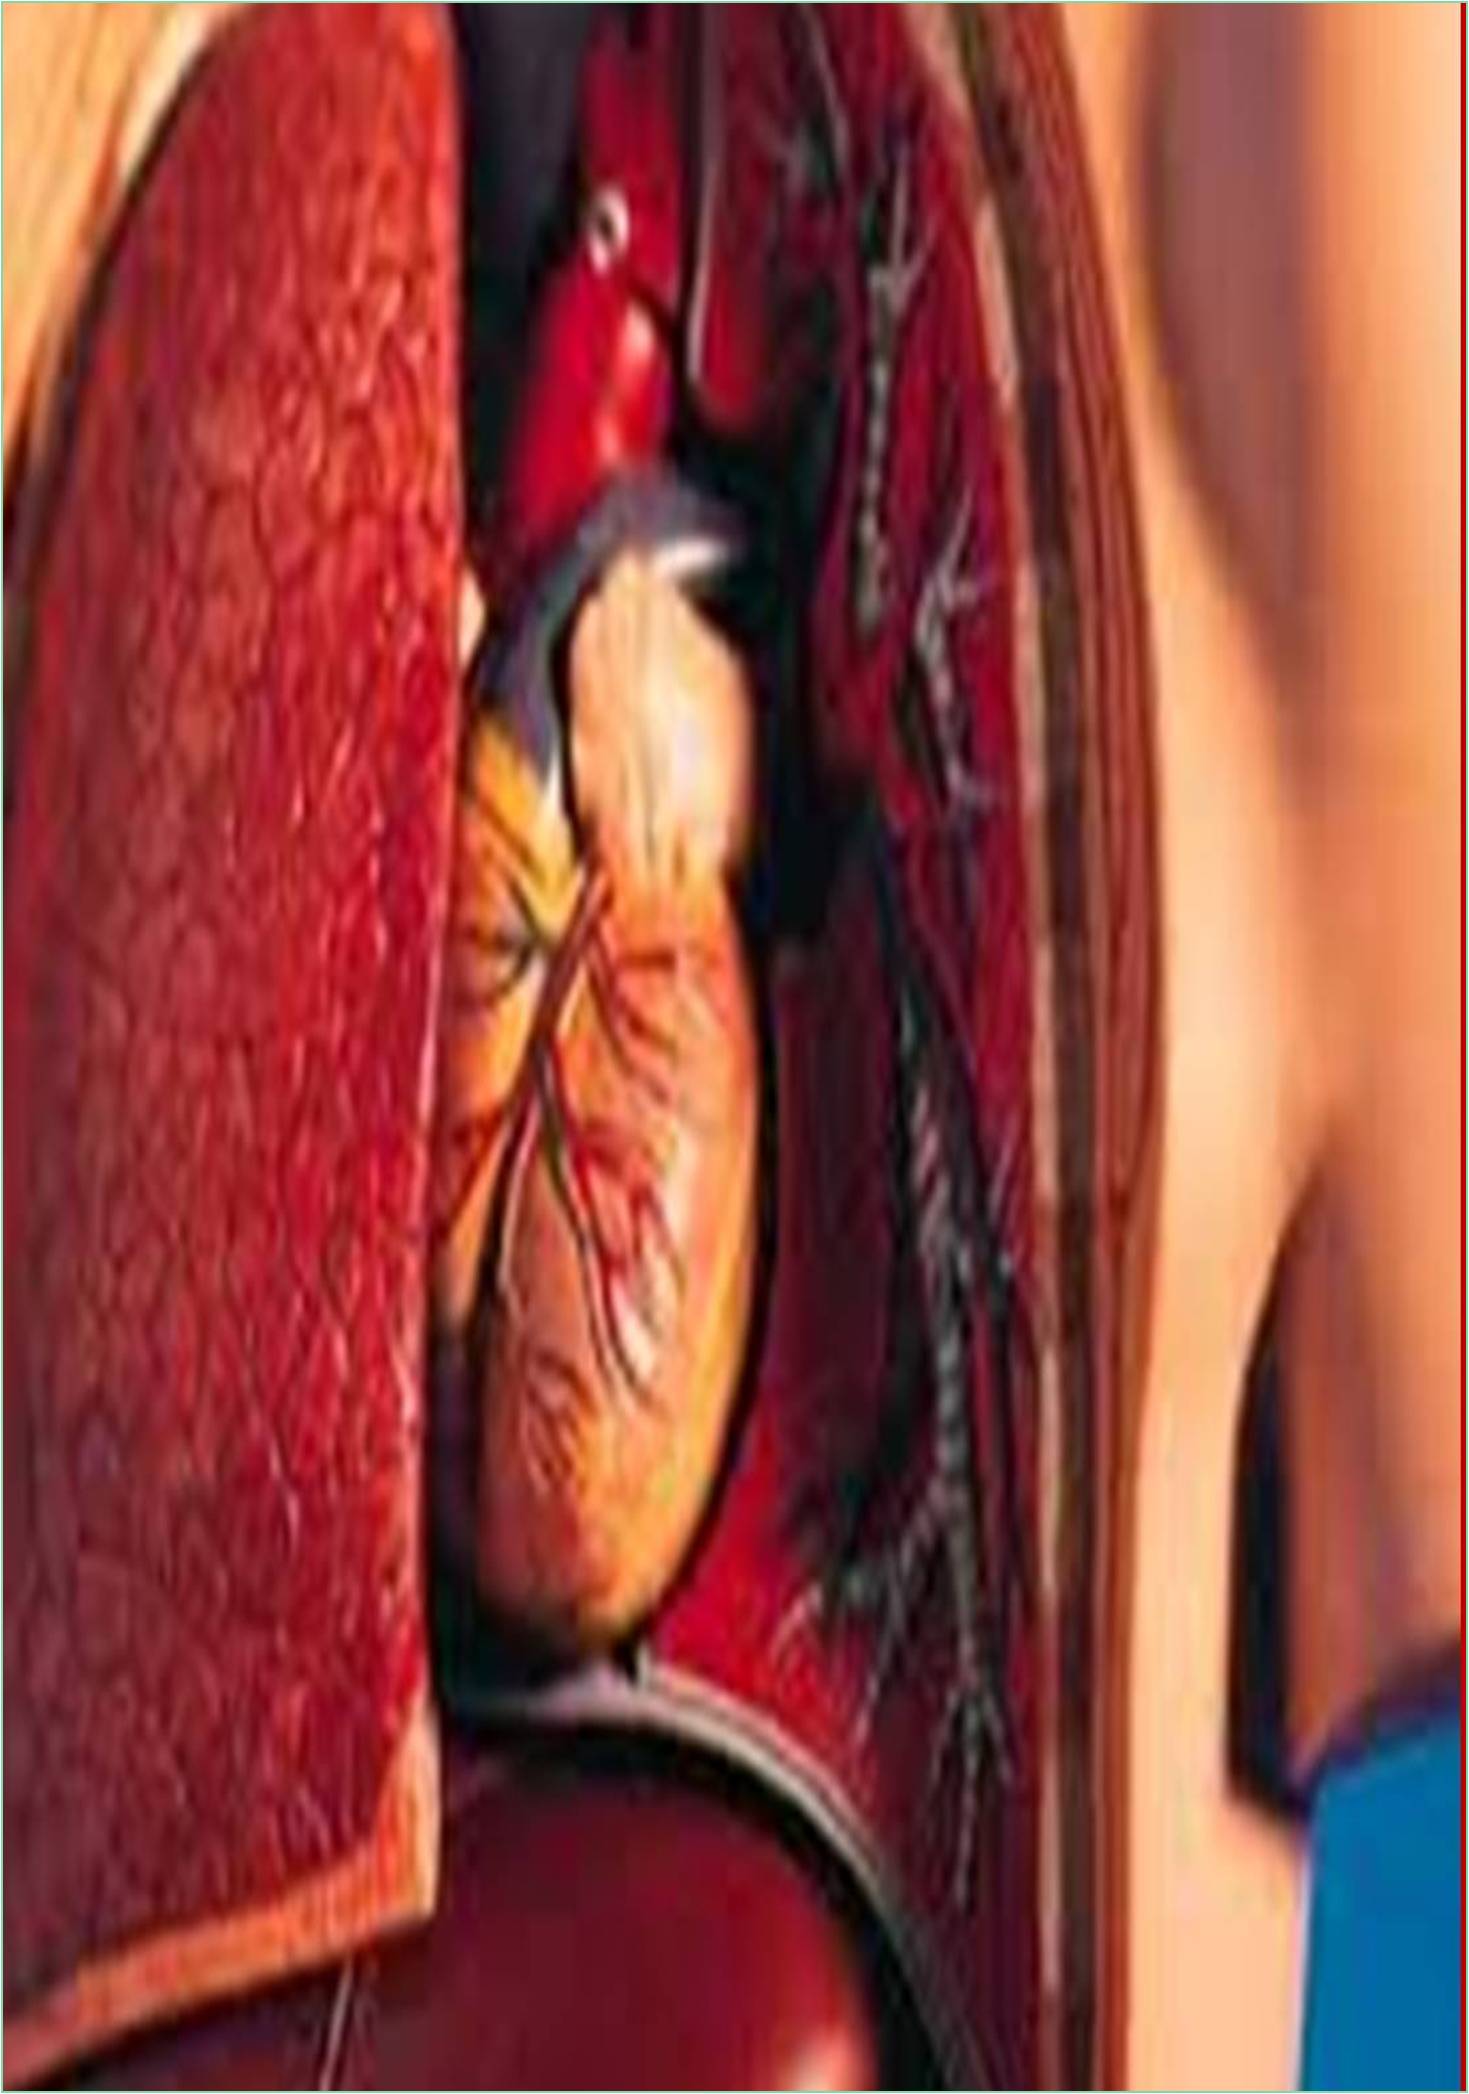 global-journal-of-gastroenterology-and-cardiology-banner.jpg